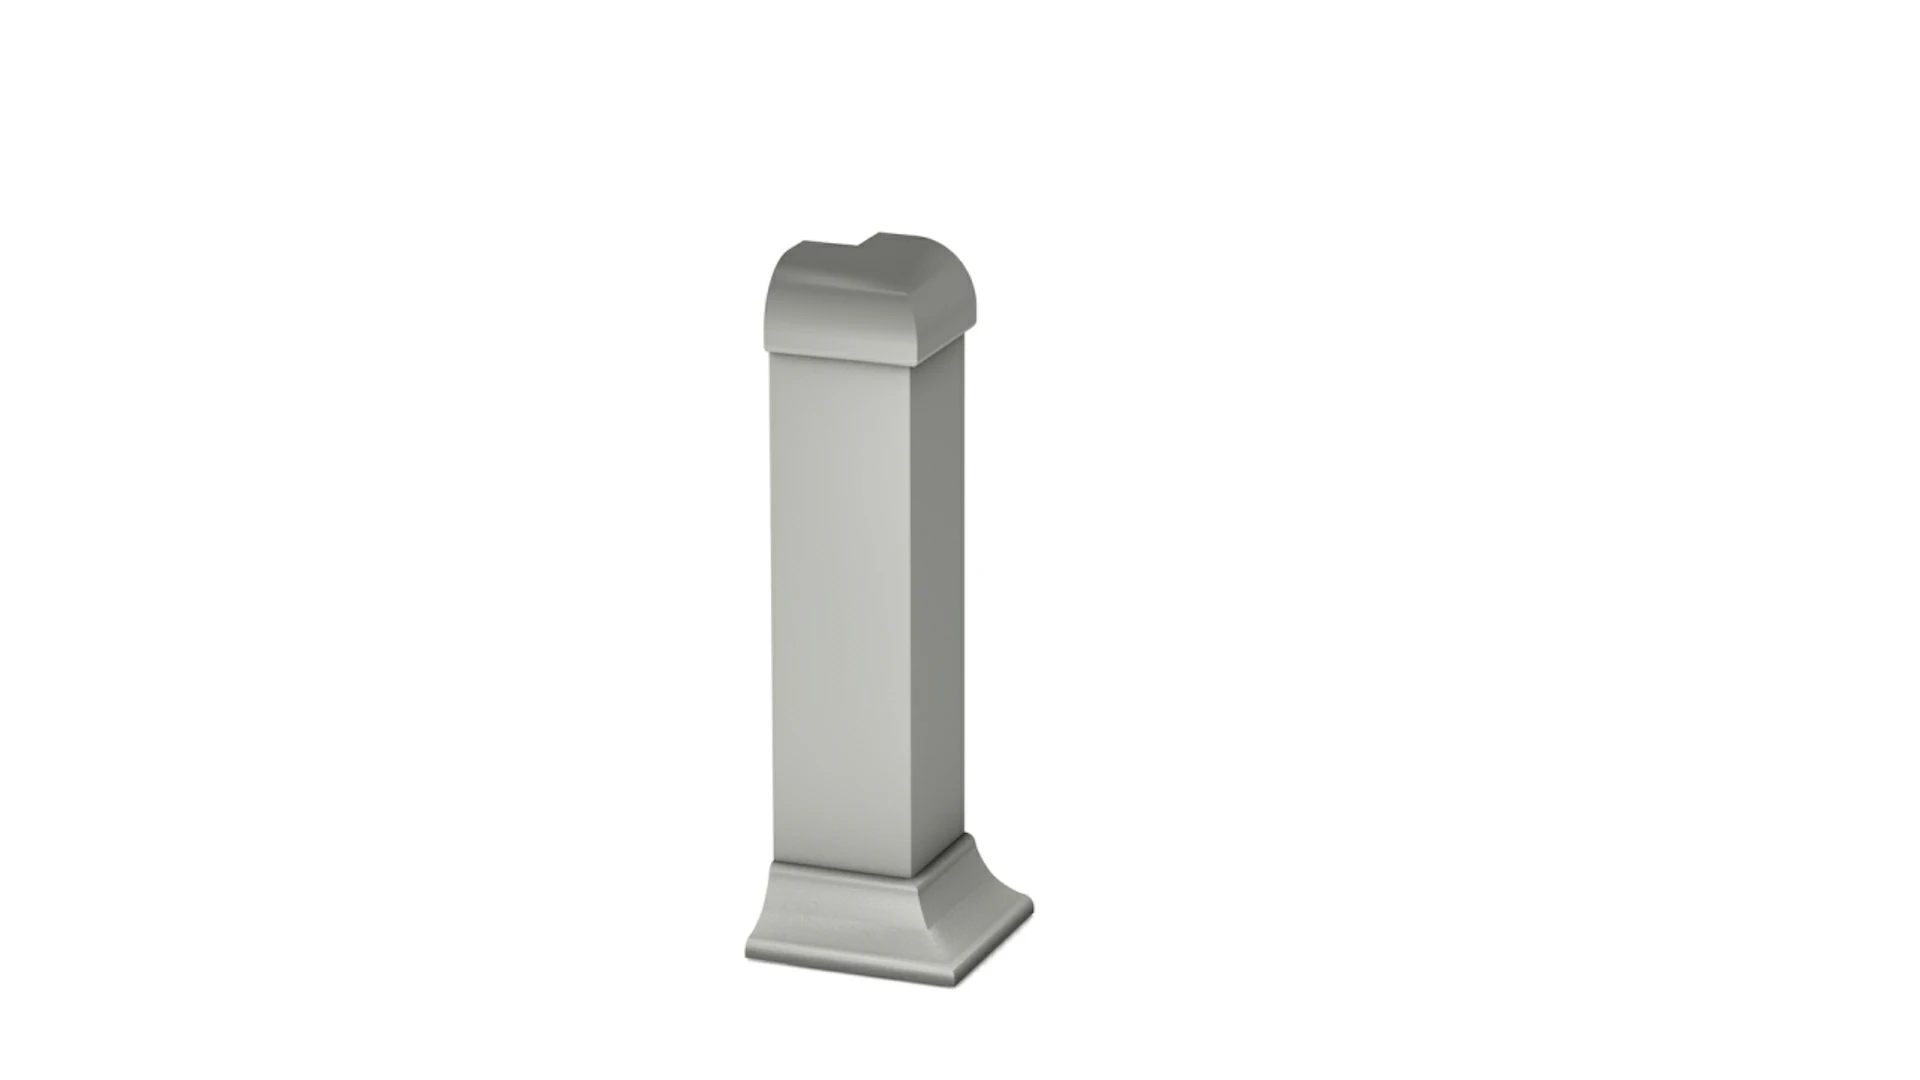 Prinz outside corner for aluminium skirting board / baseboard - 13x60 mm - titanium